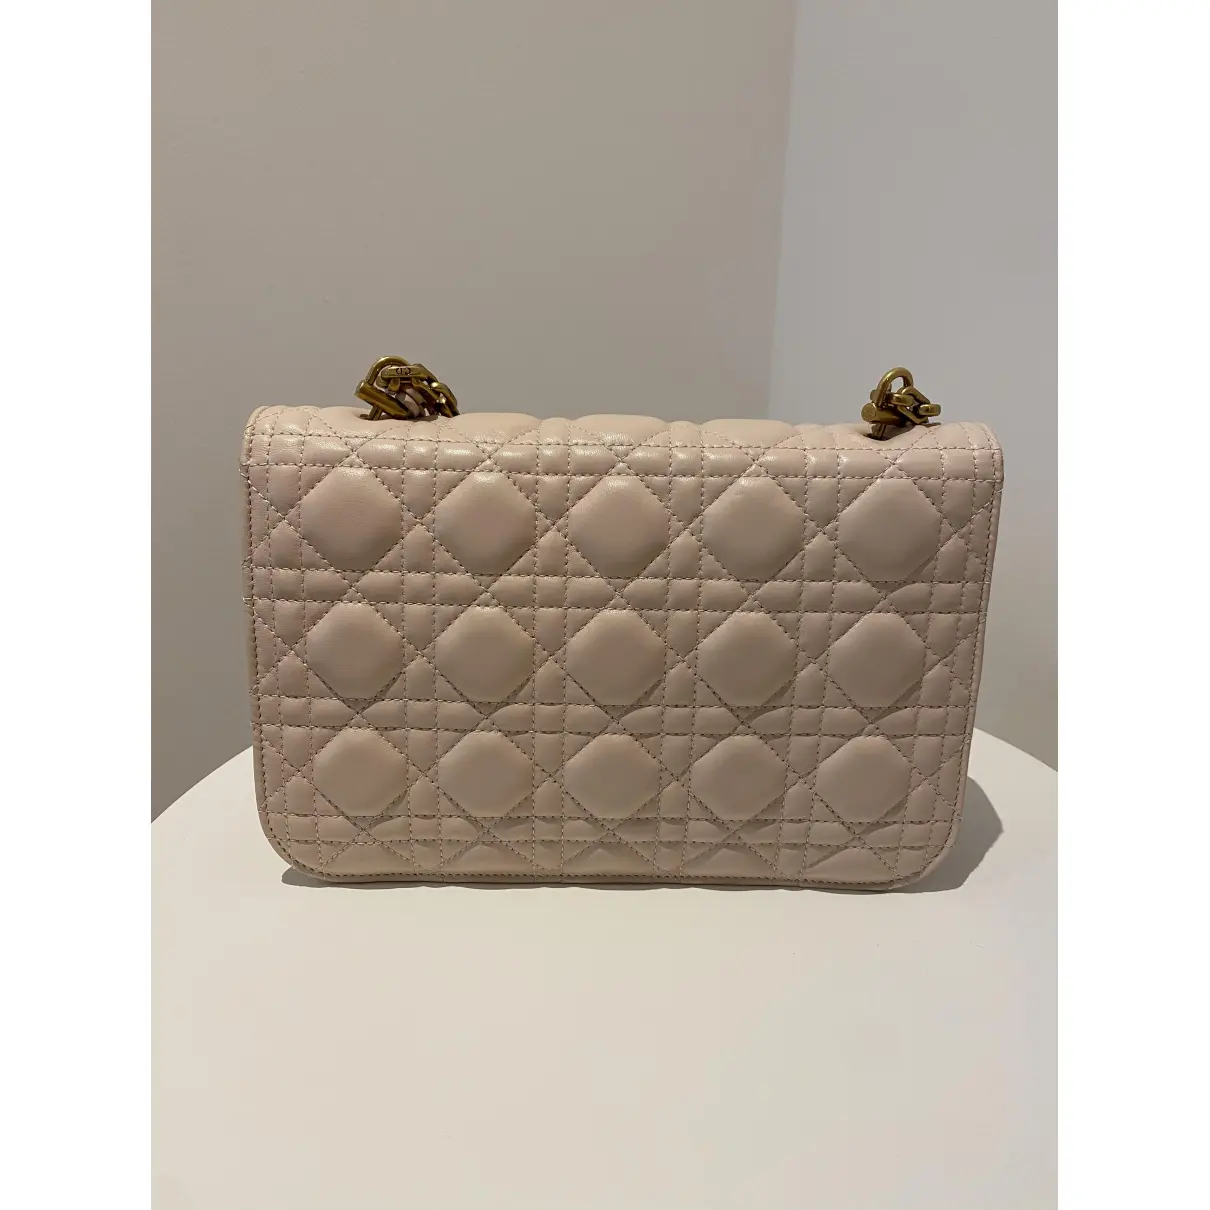 Buy Dior DiorAddict leather handbag online